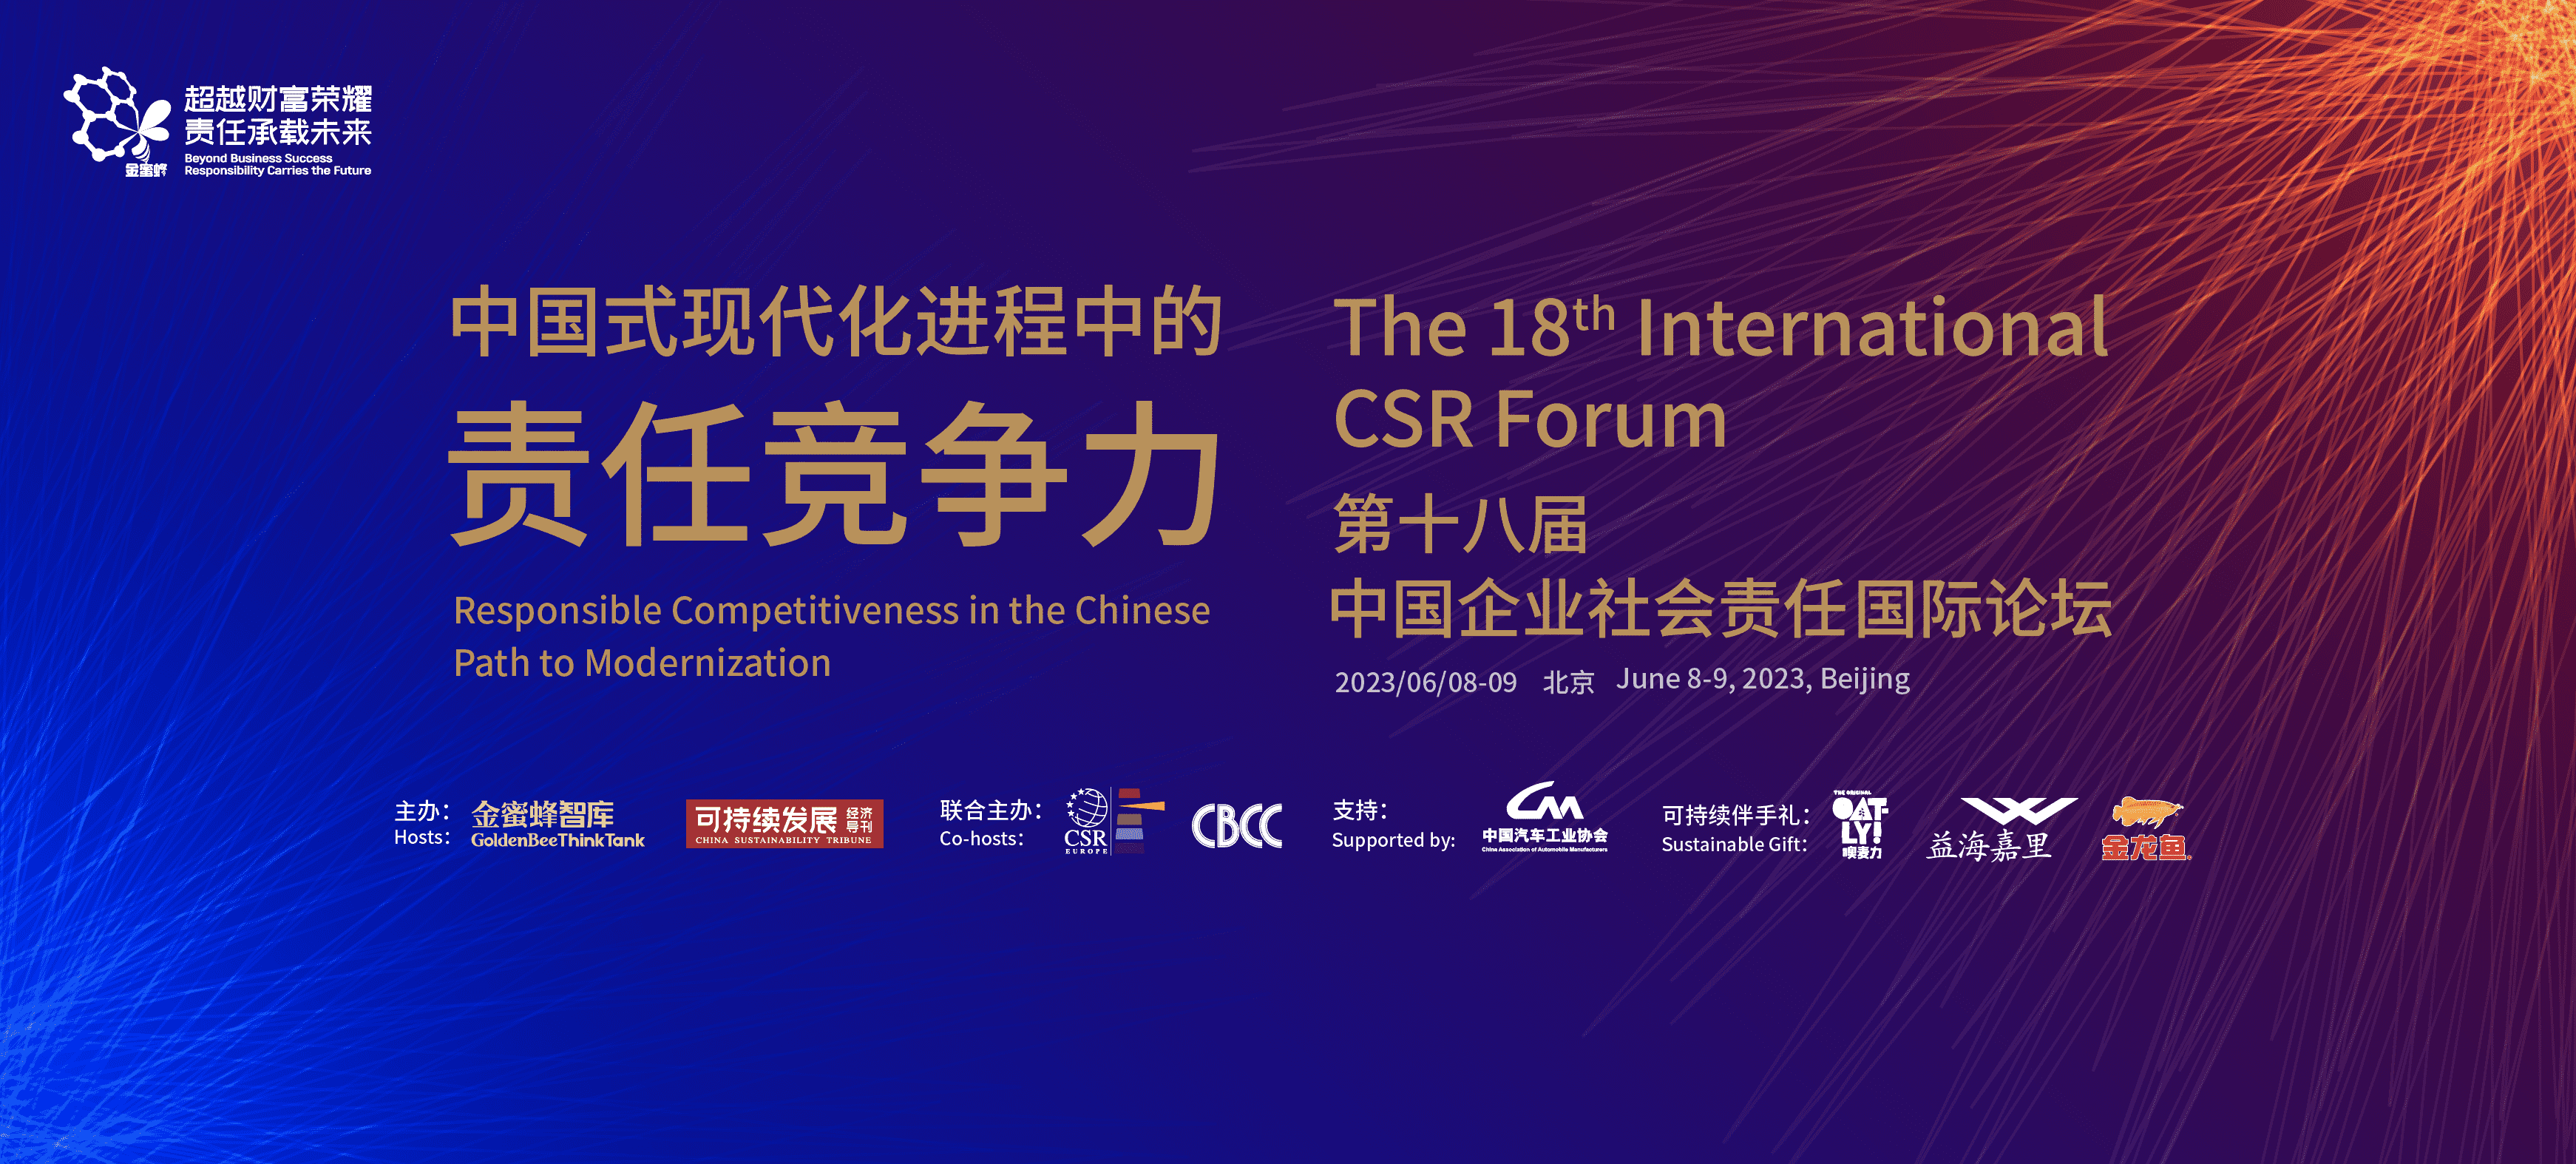 Save the date: the 18th International CSR Forum on Jun 8-9